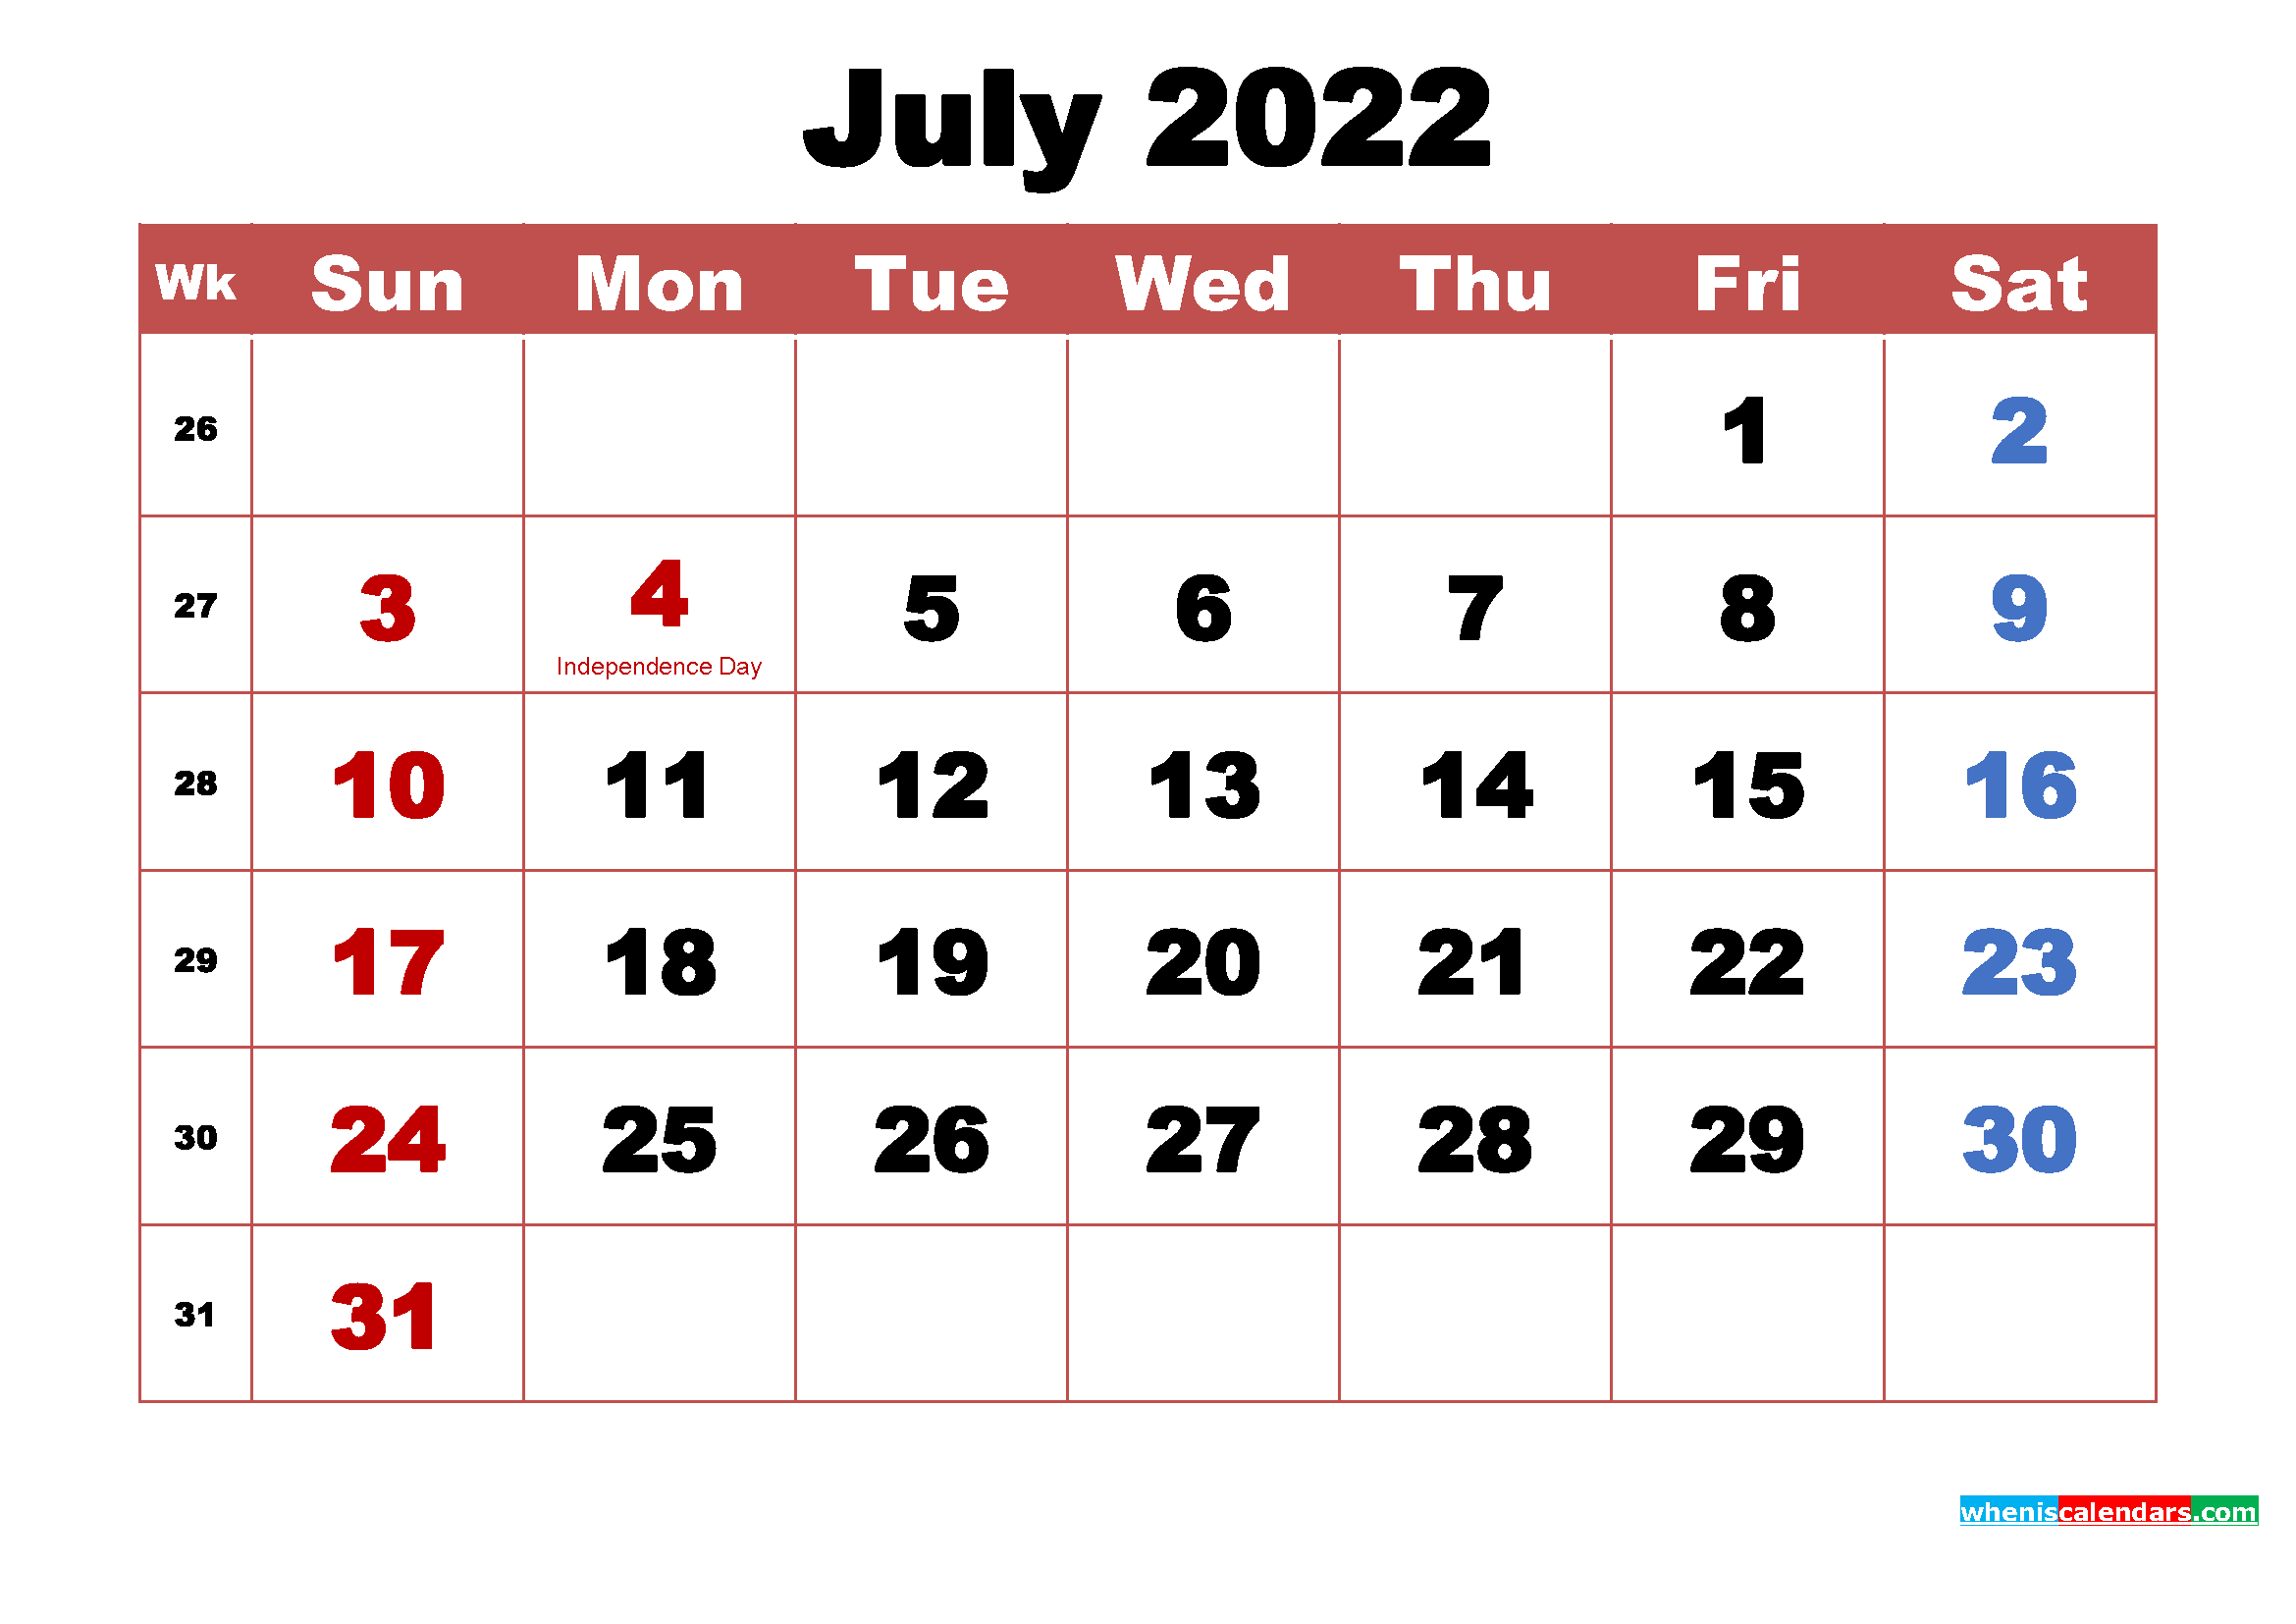 June 2022 Calendar Wallpaper July 2022 Calendar Wallpapers - Wallpaper Cave